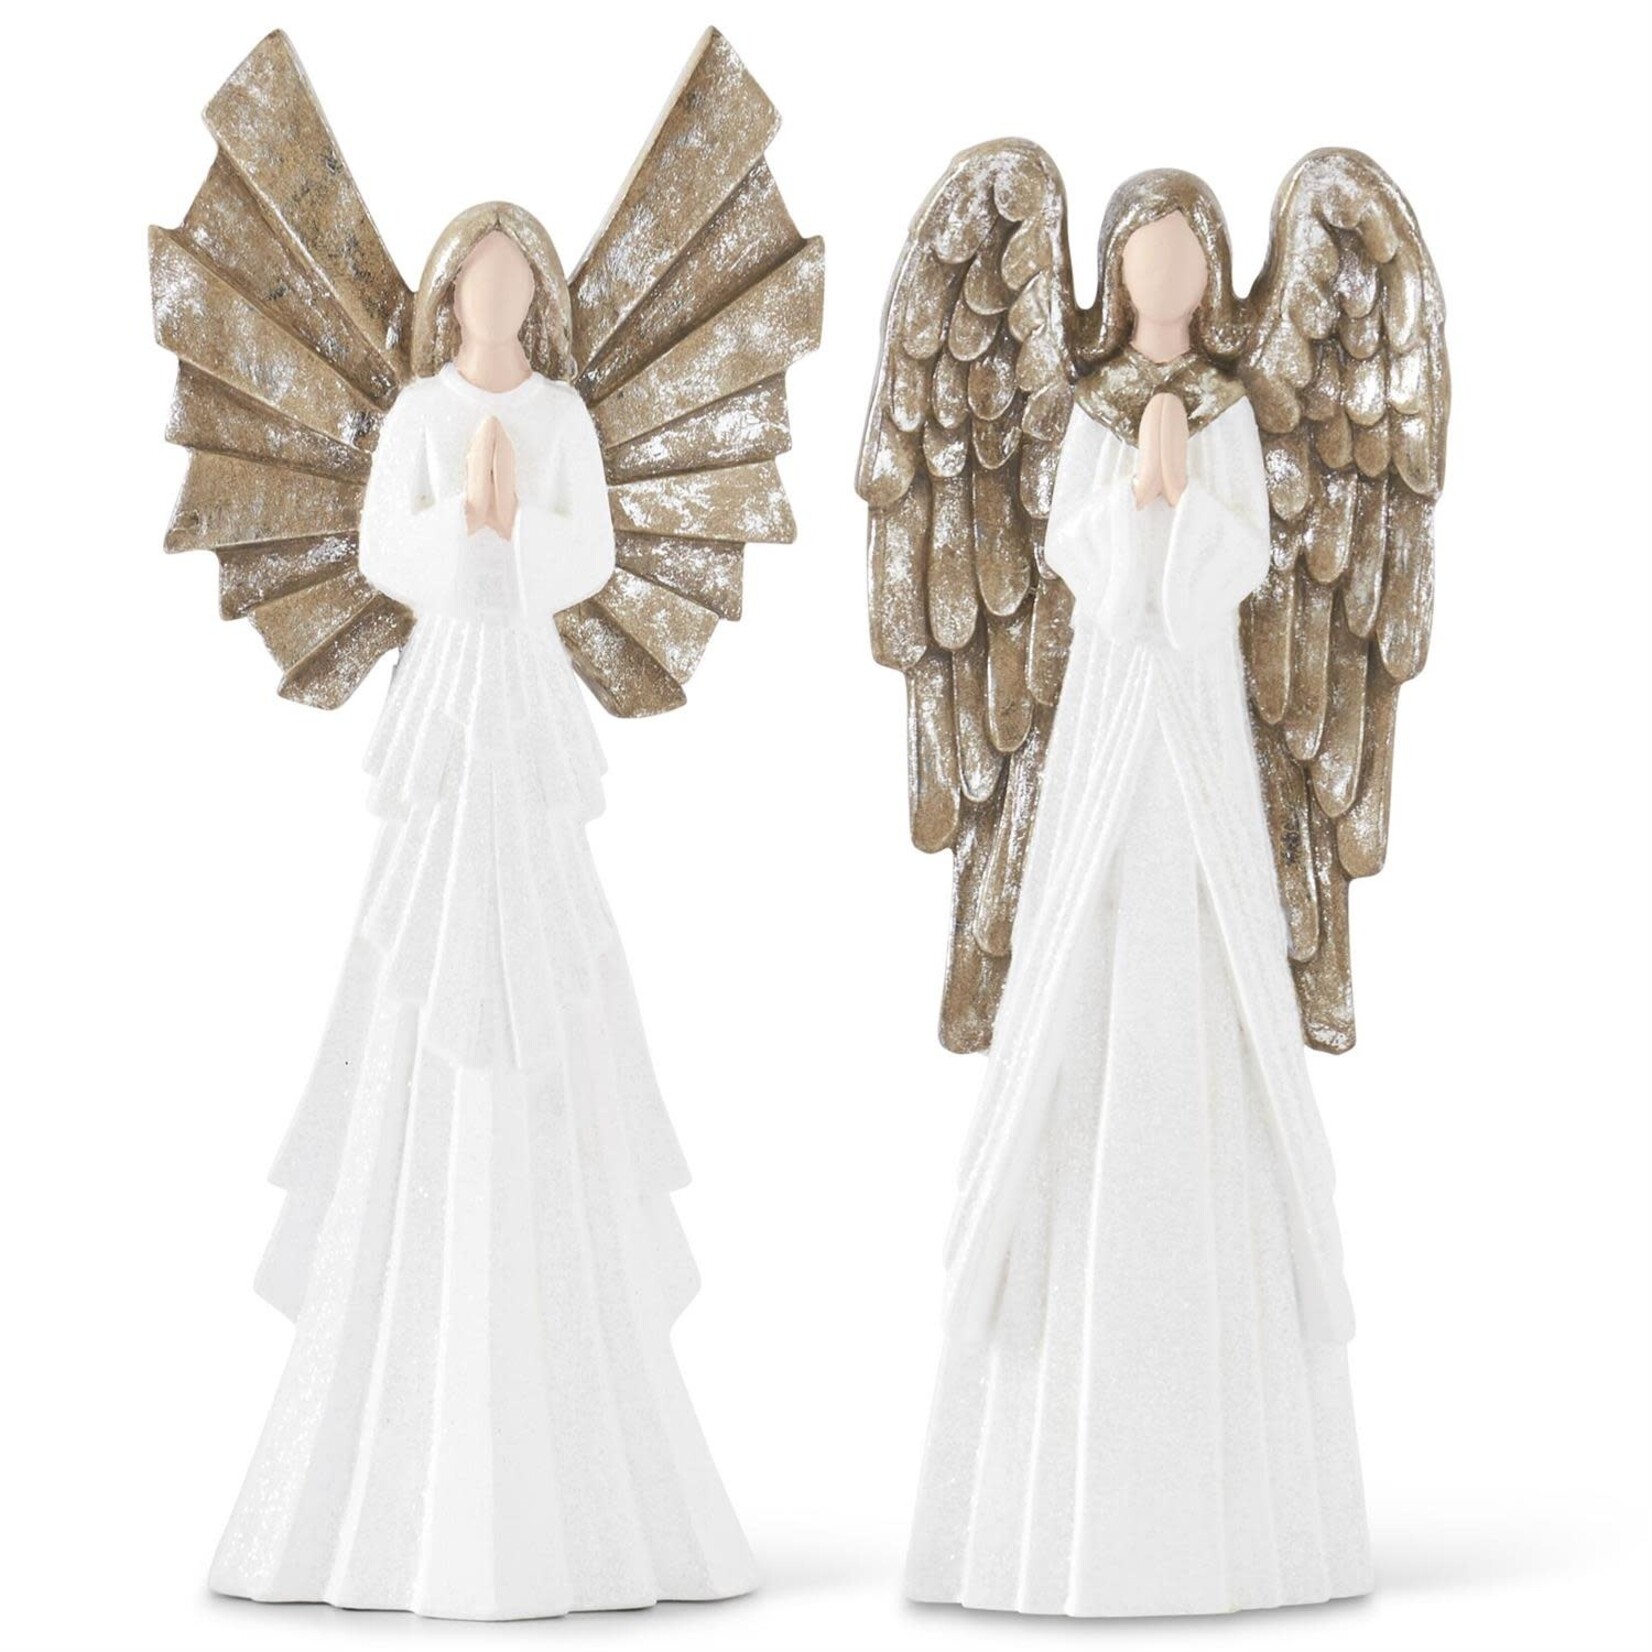 K & K WHITE GLITTERED PRAYING ANGELS